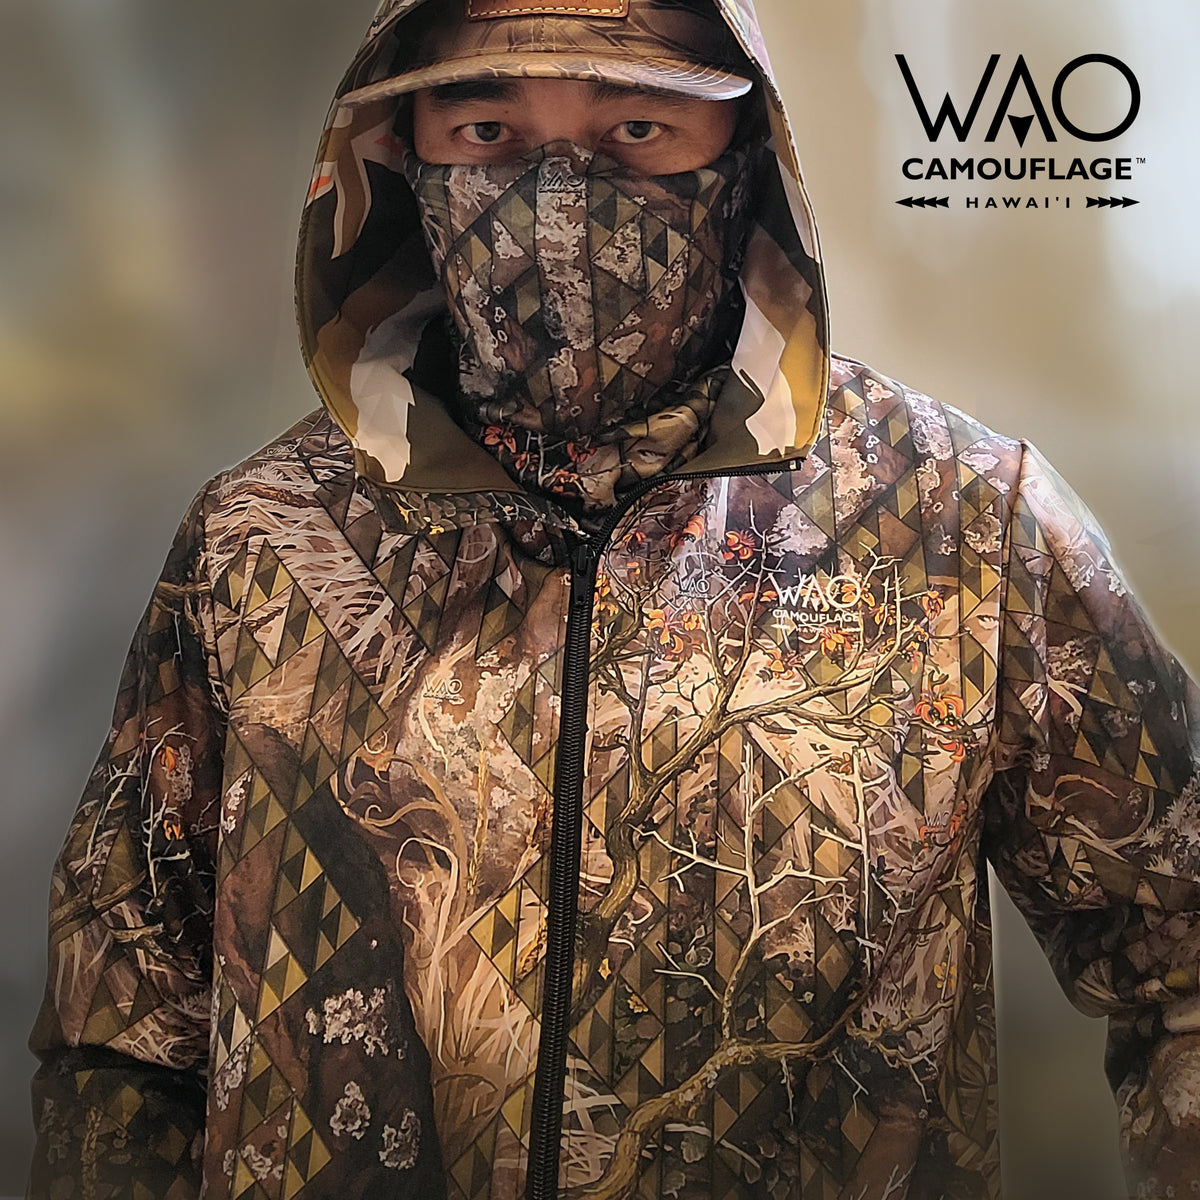 Wao Camouflage™ Longsleeve Shirt in Pa'akea (Limestone) – Wao Camouflage Co.